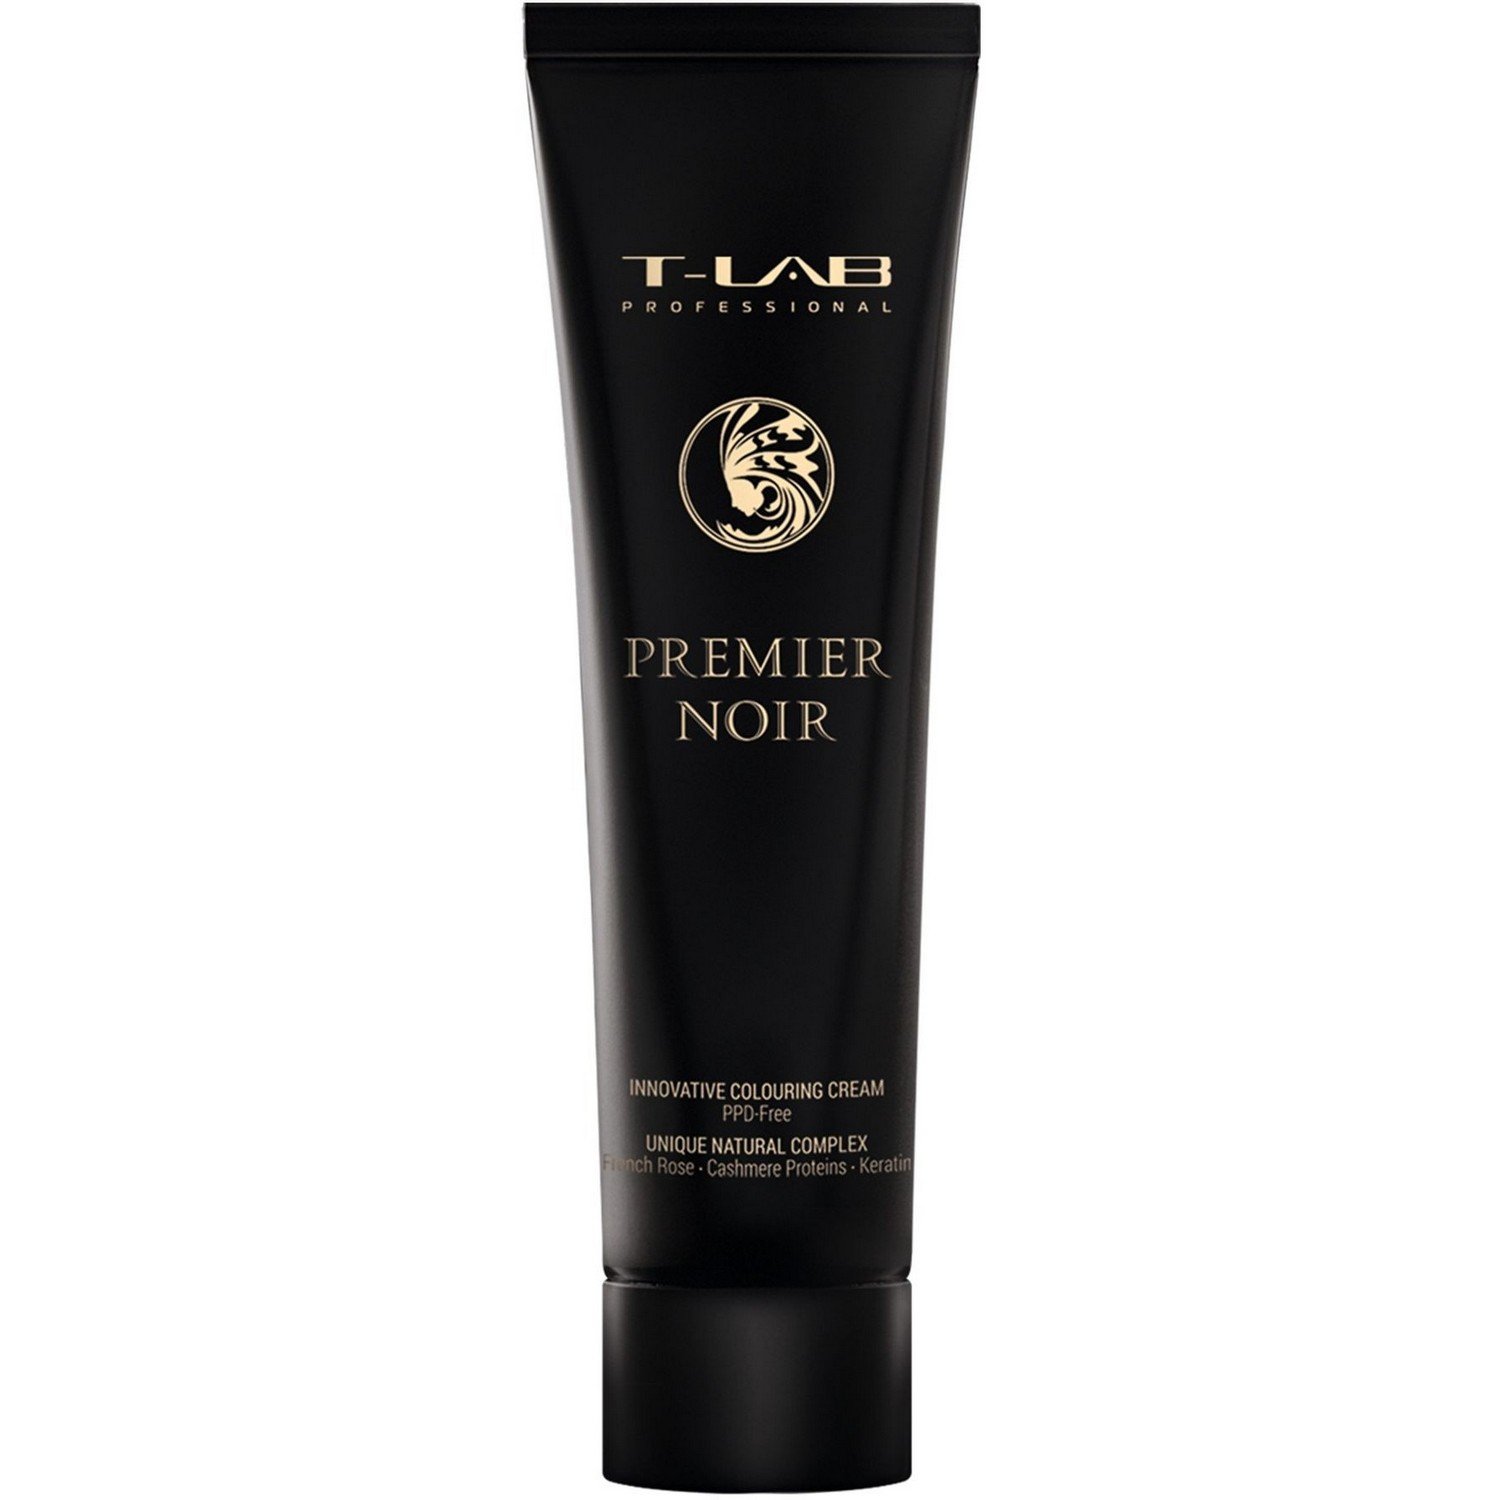 Крем-фарба T-LAB Professional Premier Noir colouring cream, відтінок 3.0 (natural dark brown) - фото 1